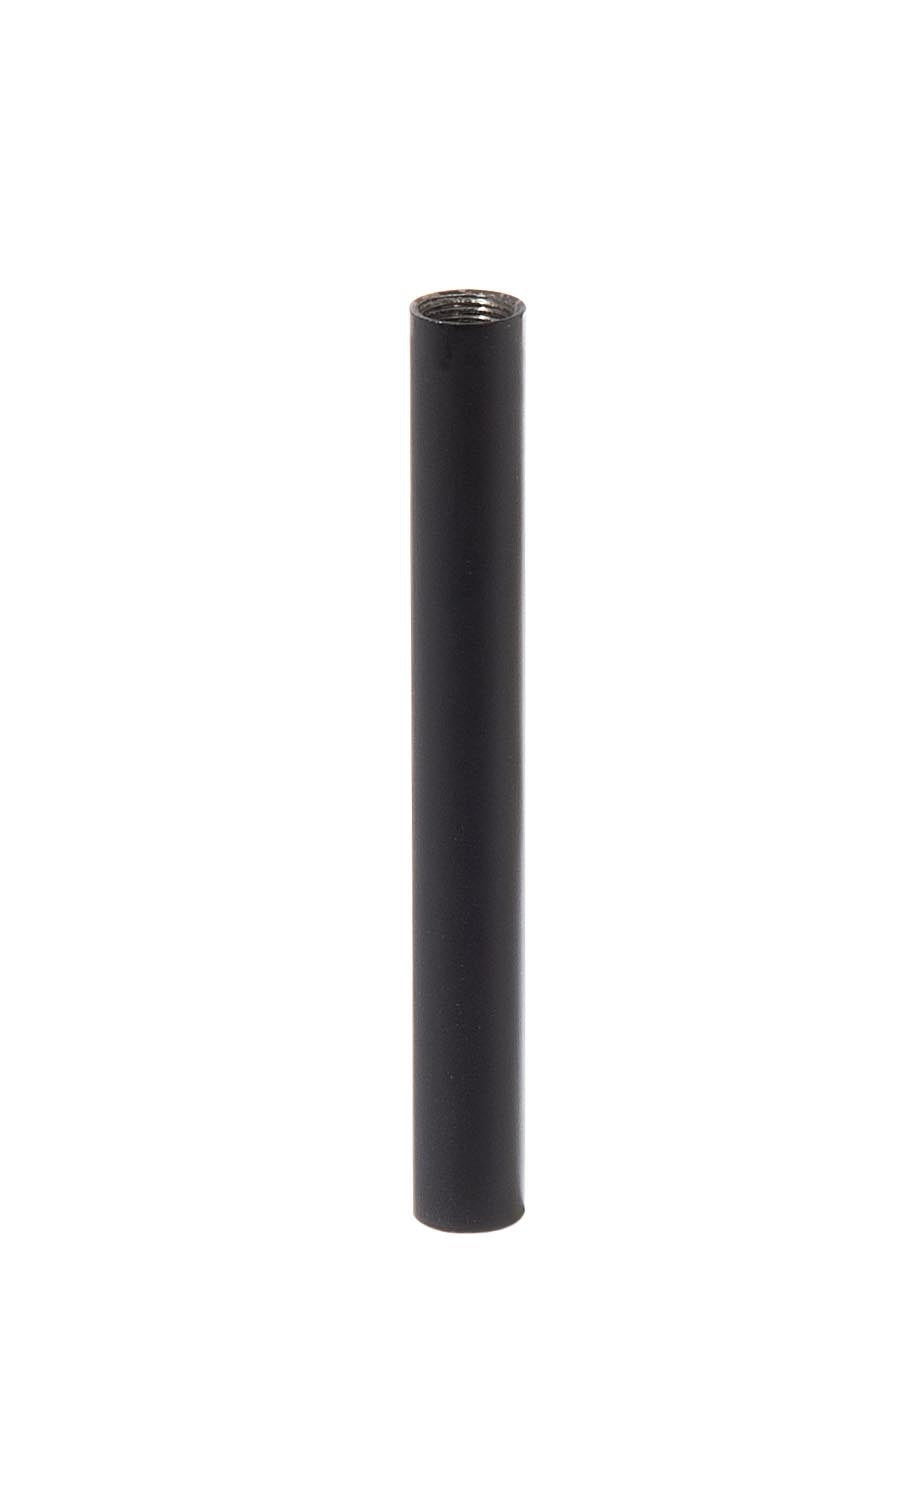 Satin Black Finish Female Threaded Steel Pipe, 1/8F, Choice of Length